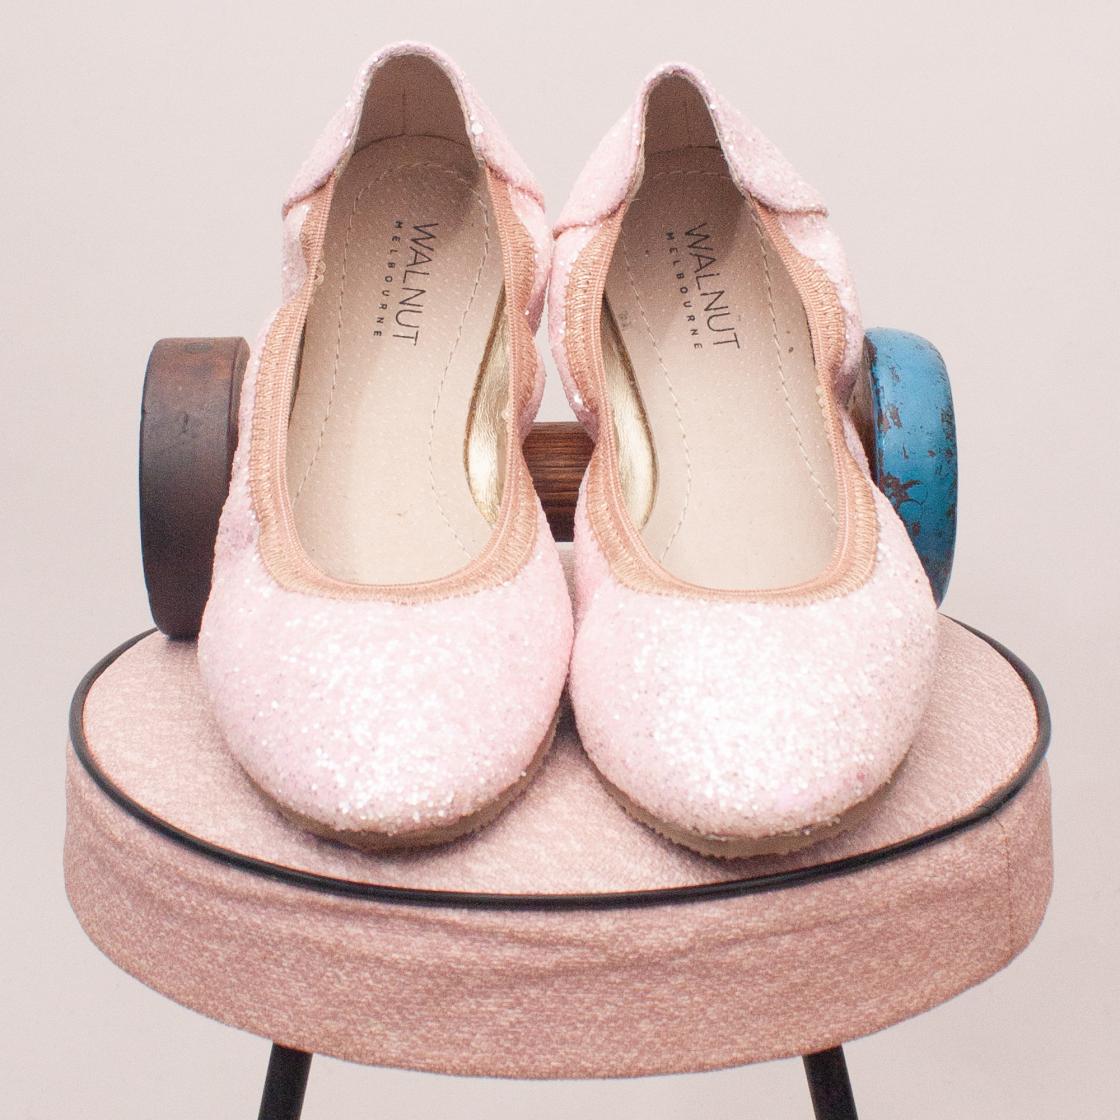 Walnut Glitter Shoes - Size EU 35 (Age 7 Approx.)